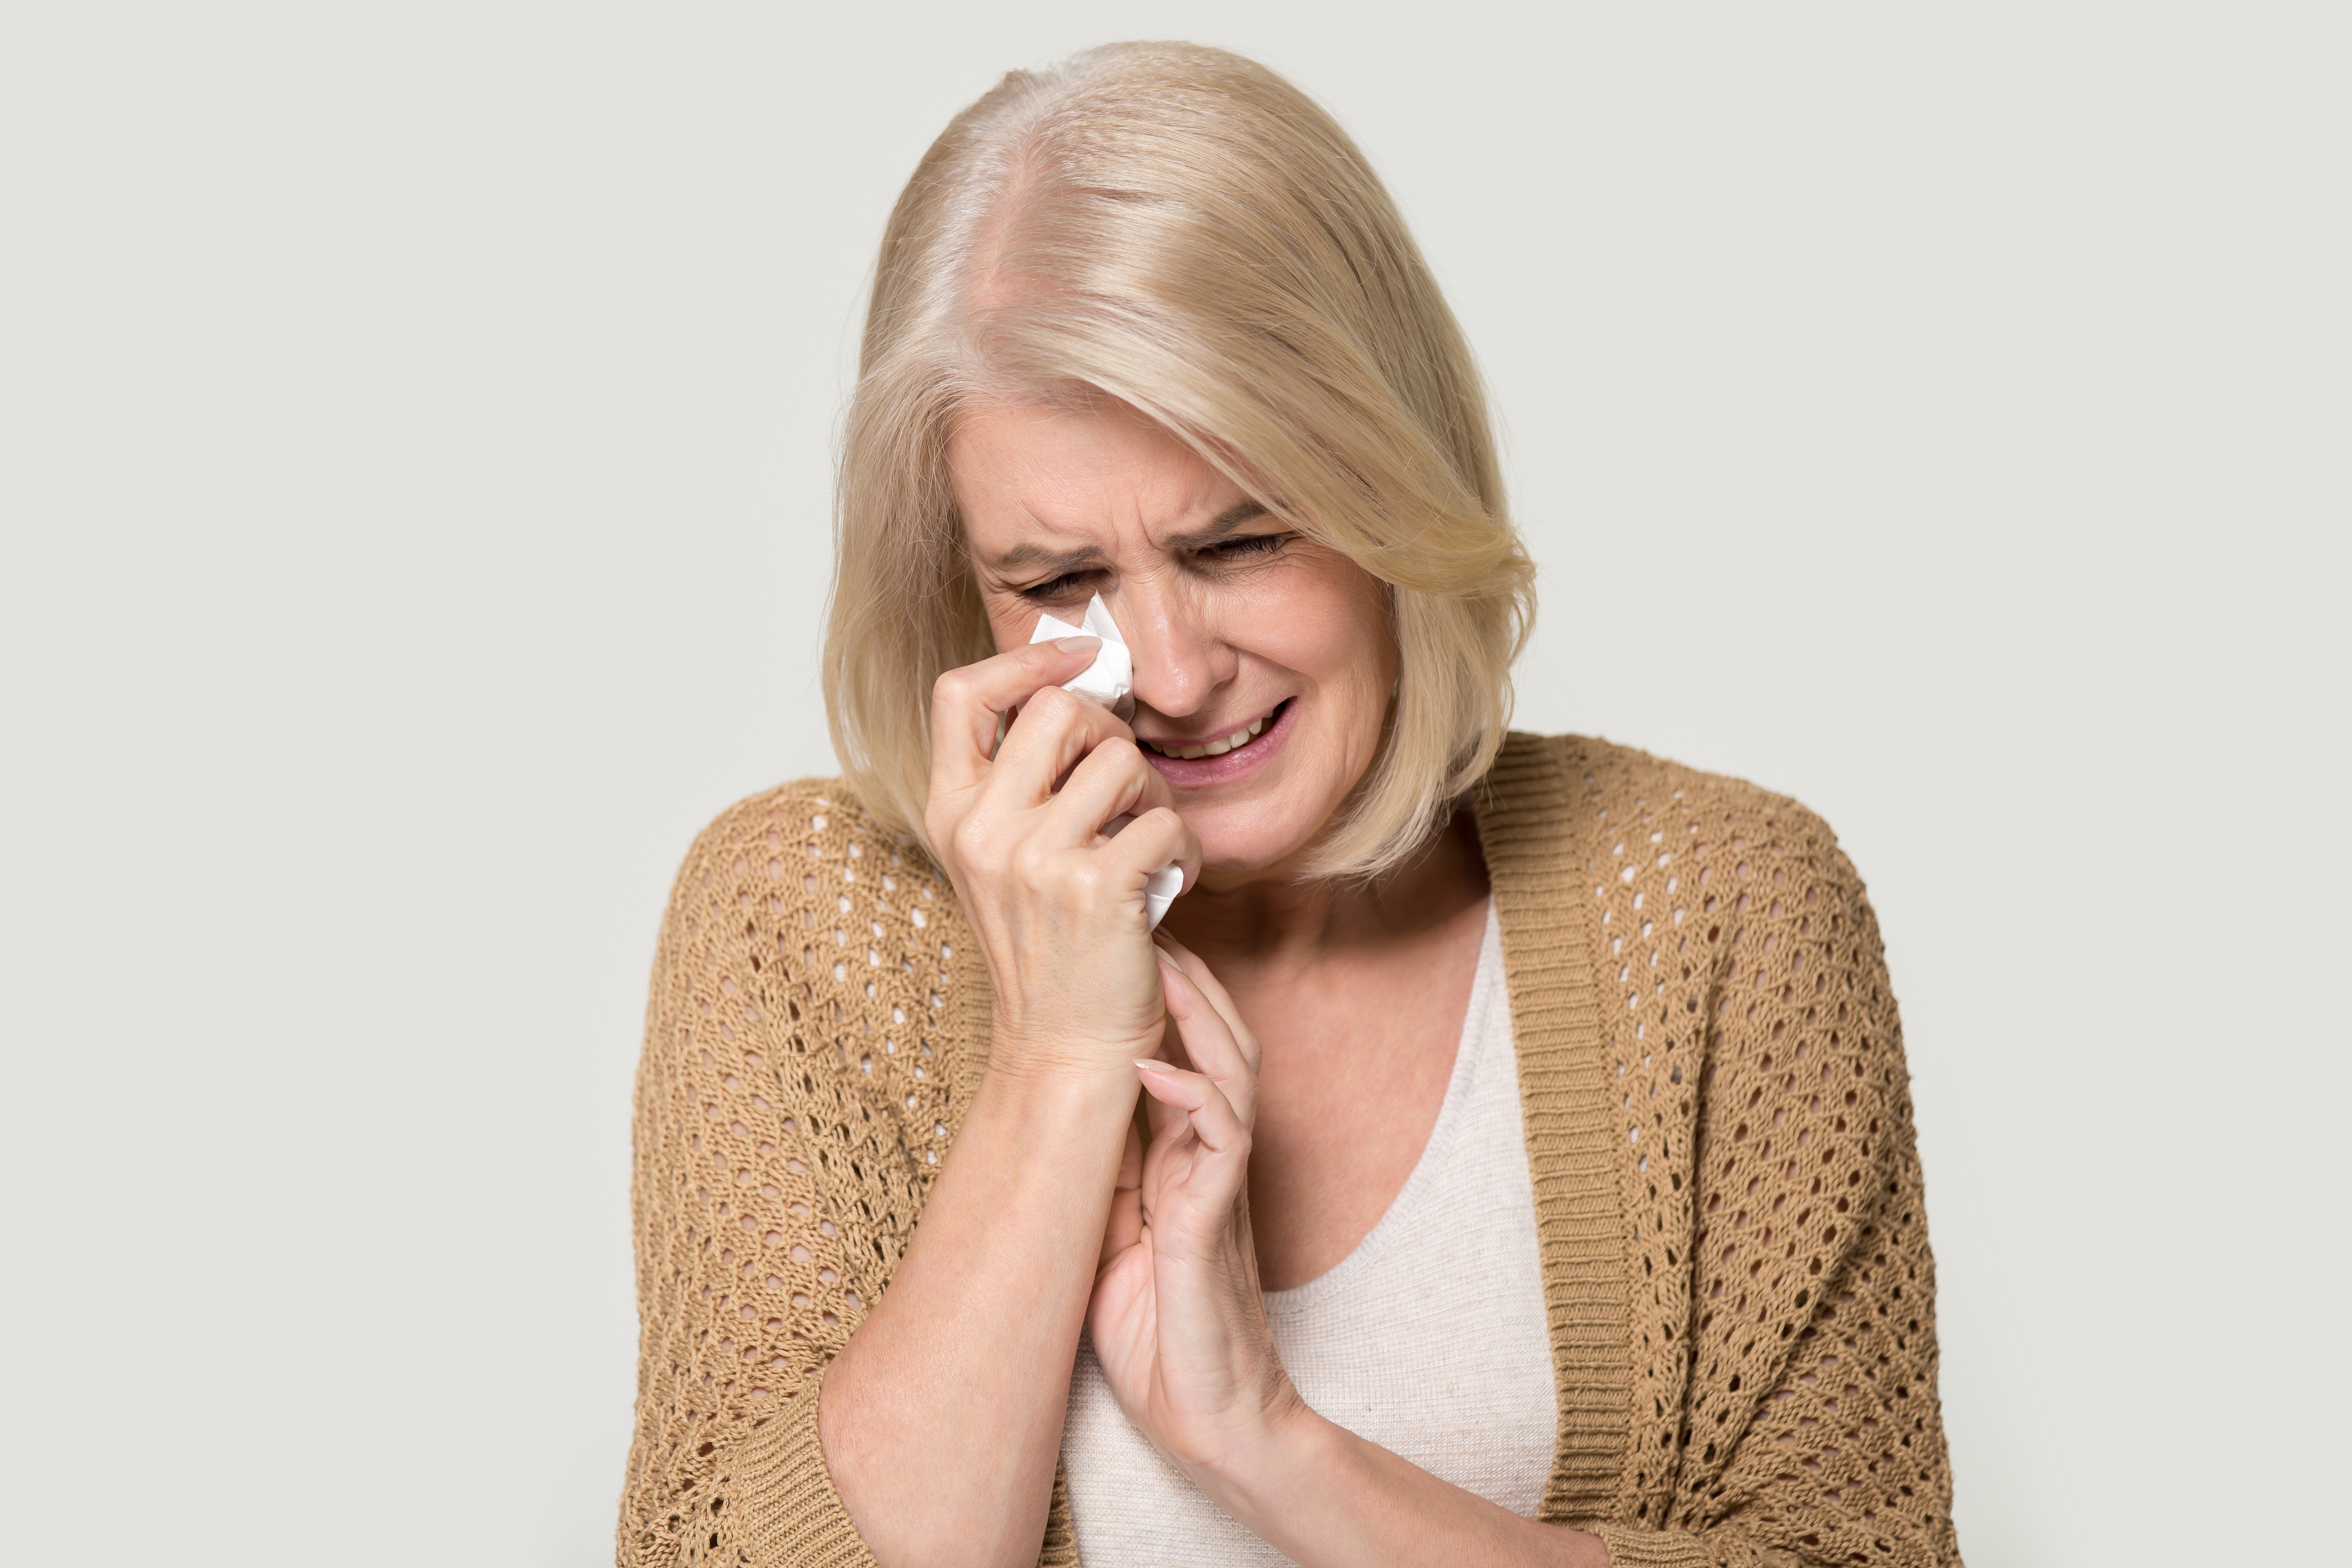 An elderly woman crying | Source: Shutterstock